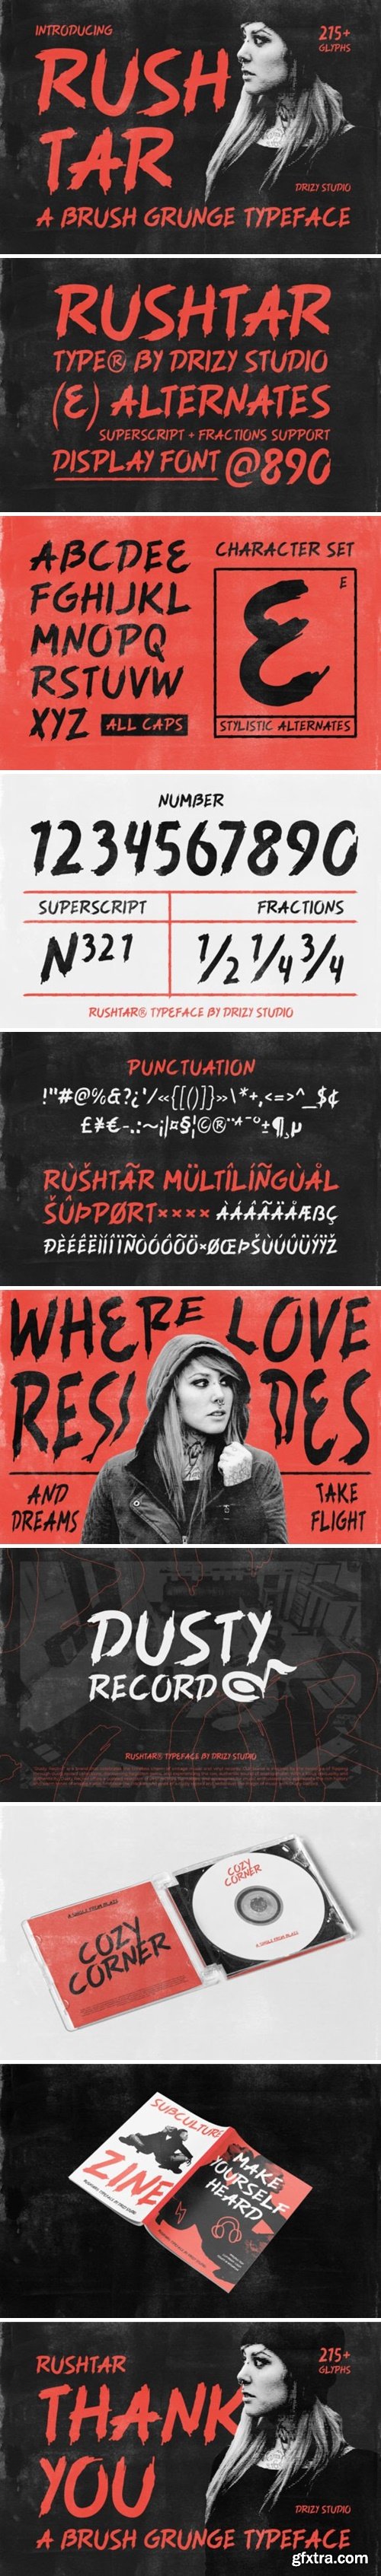 CM - Rushtar - Brush Grunge Typeface 92476557